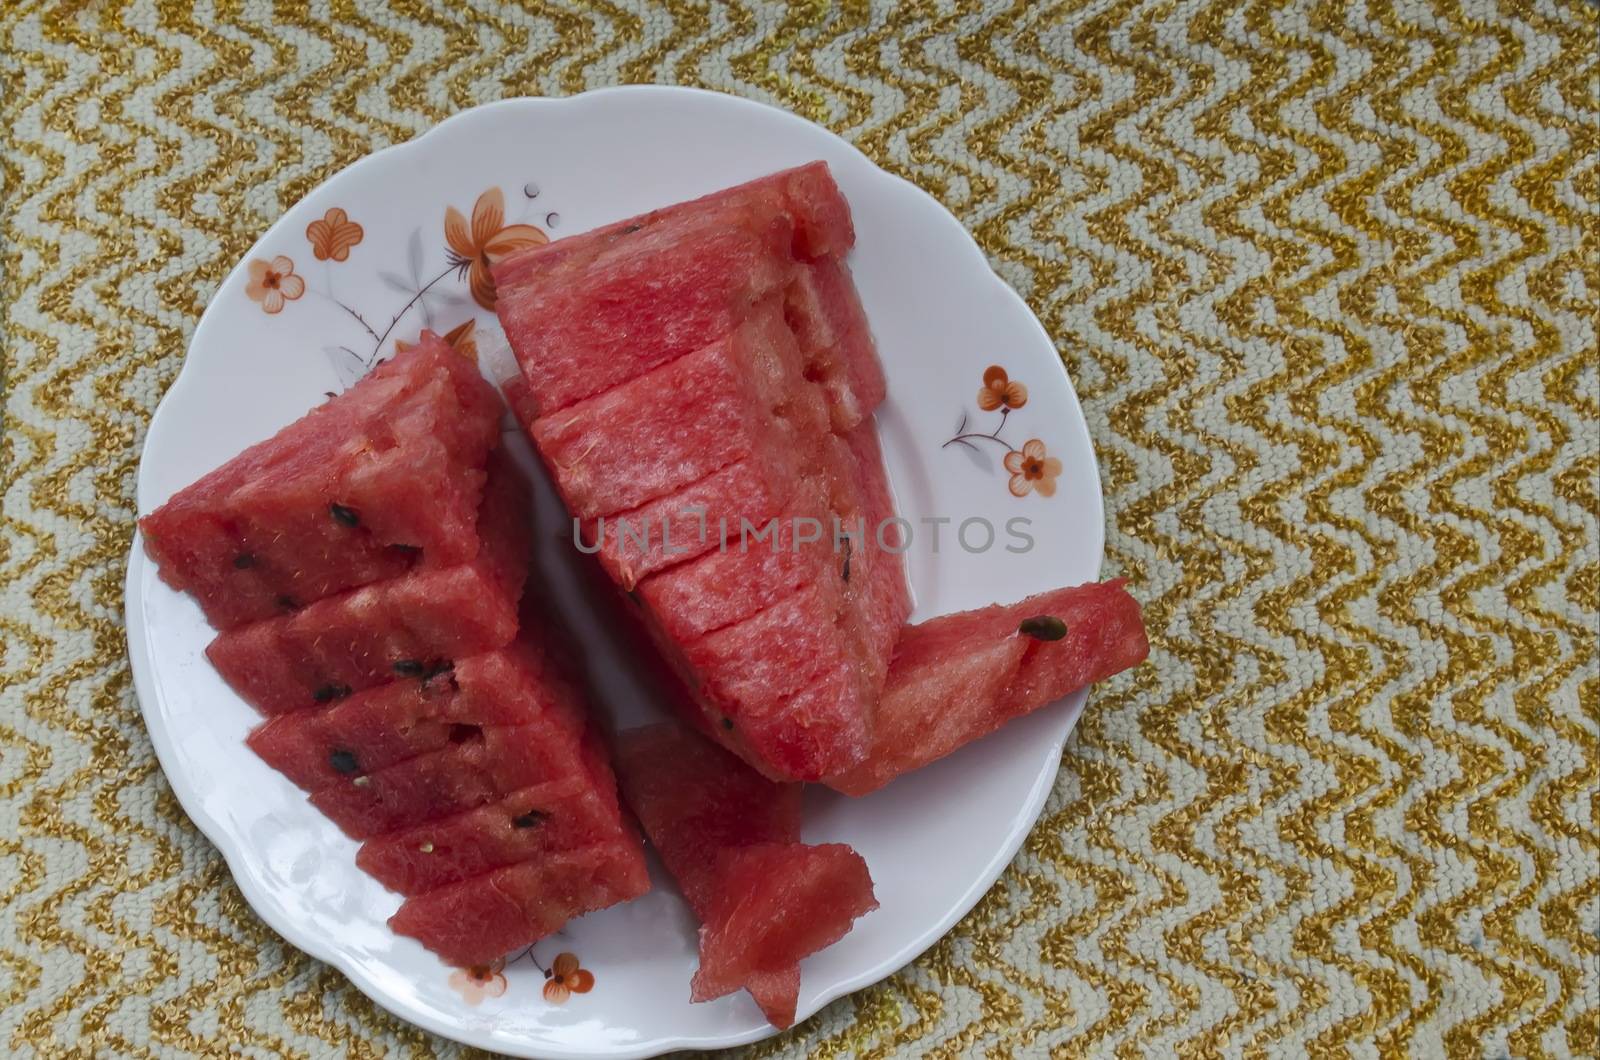 Slices of juicy watermelon arranged on a plate, Sofia, Bulgaria